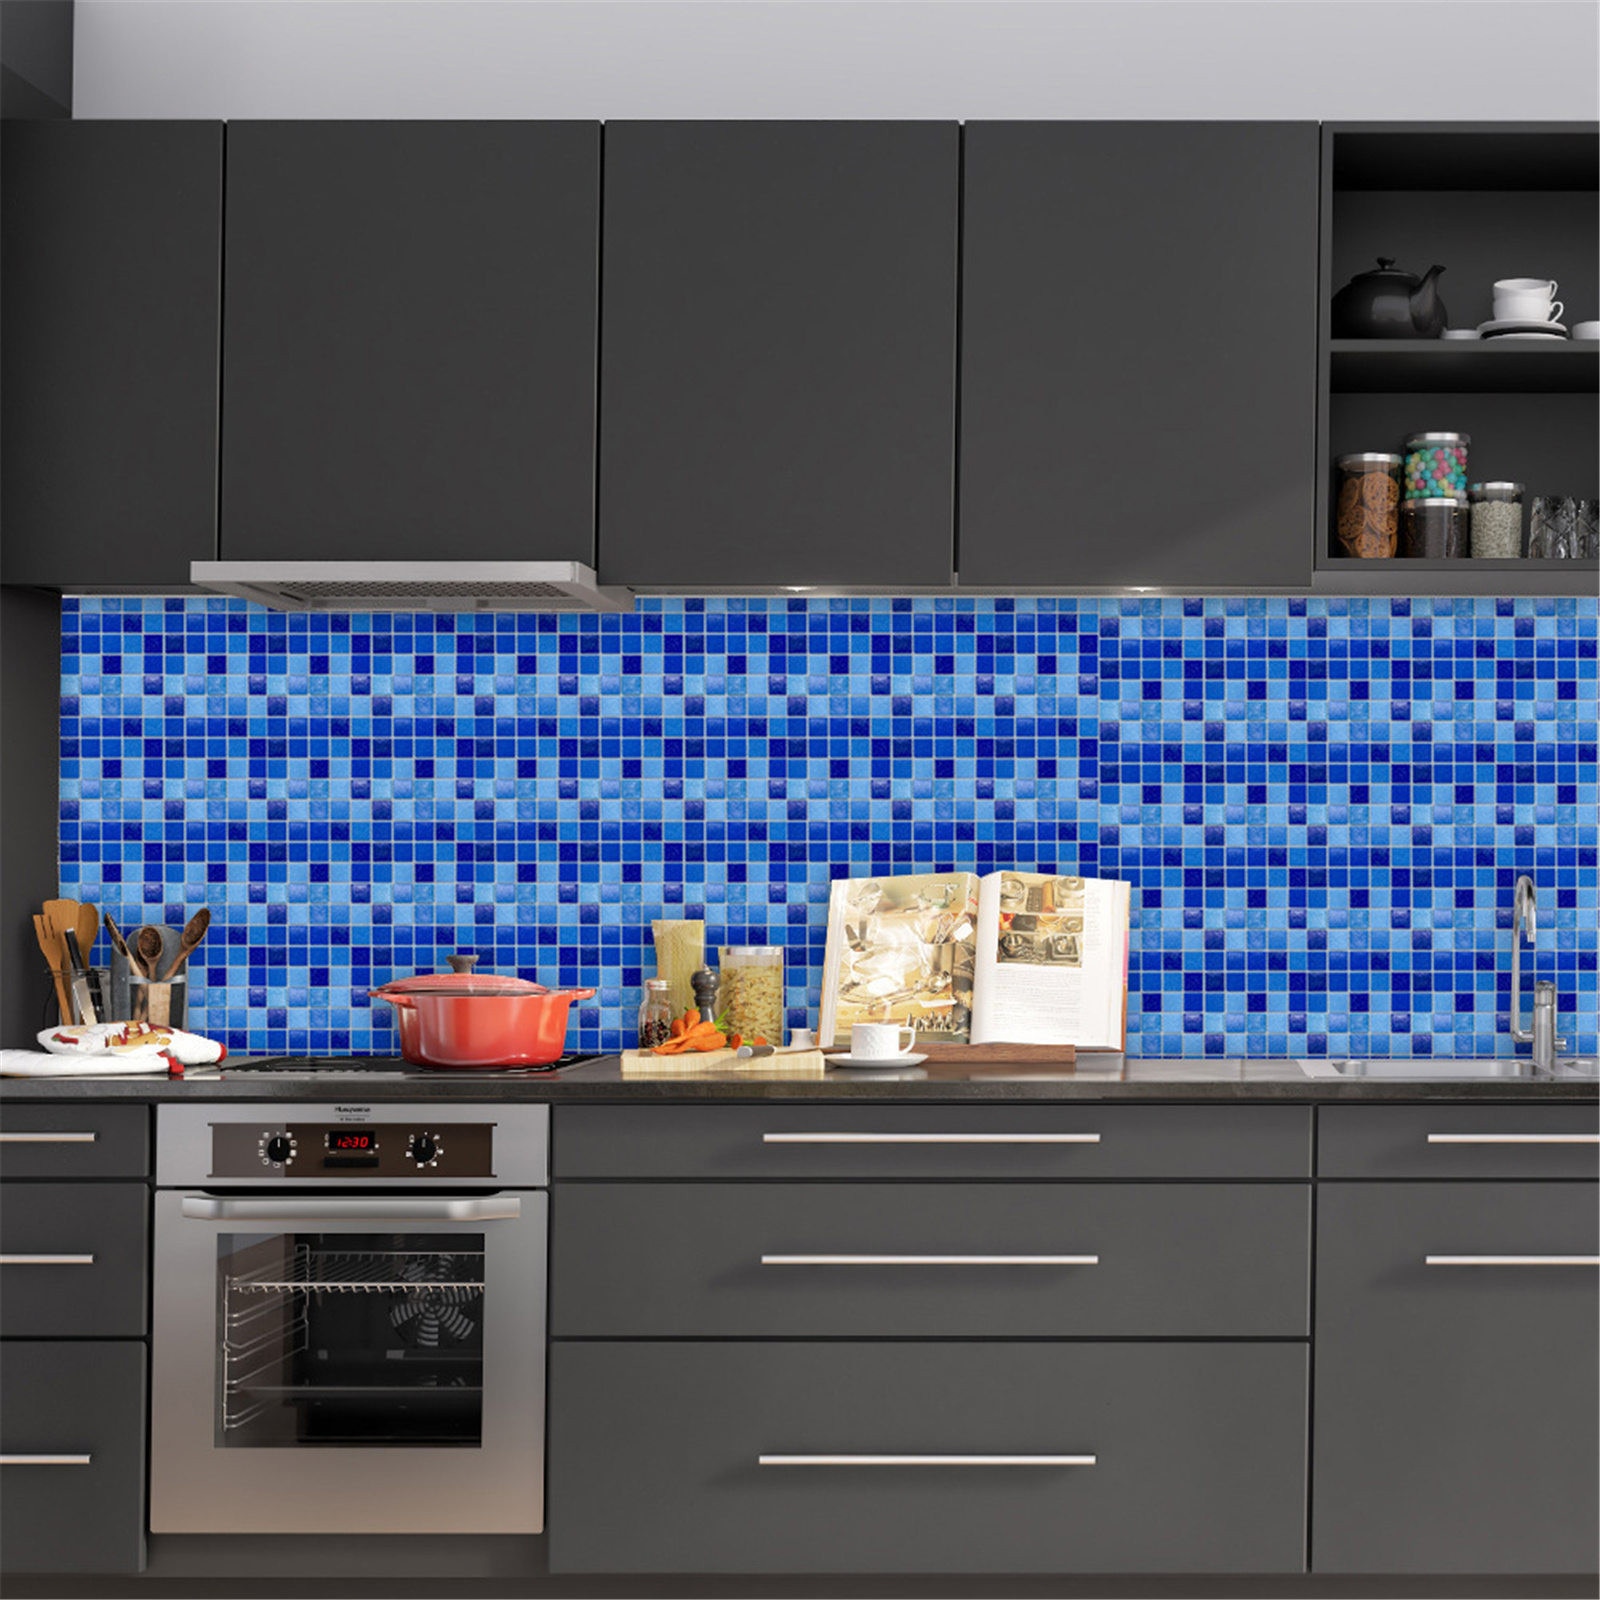 Waterproof Self Adhesive Vinyl Tile Wall Sticker DIY Peel and Stick Backsplash Kitchen Home Living Room TV Background Wall Decor